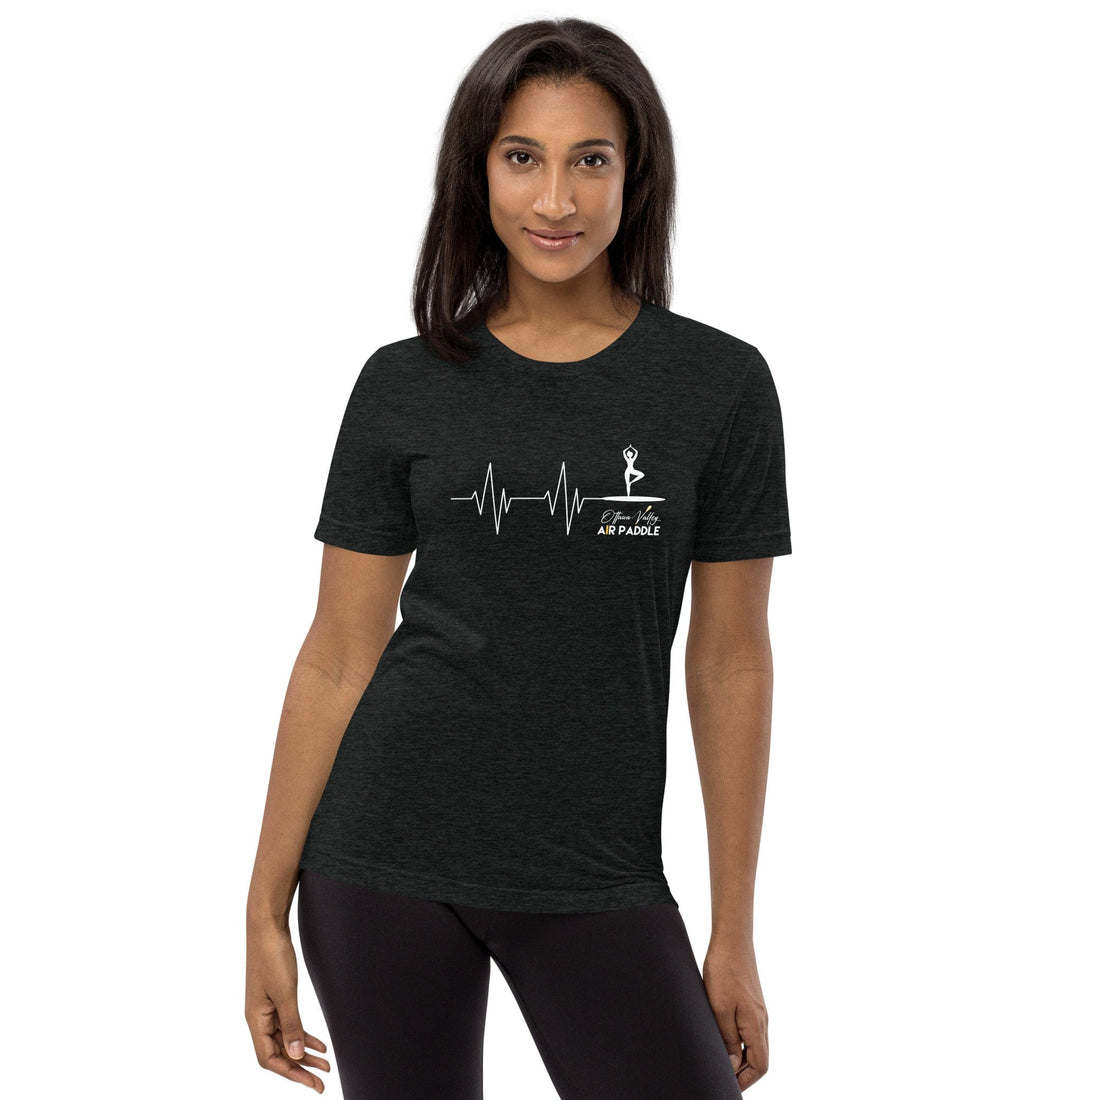 Ottawa Valley Air Paddle Charcoal-Black Triblend / XS Heartbeat Yoga Women's T-Shirt